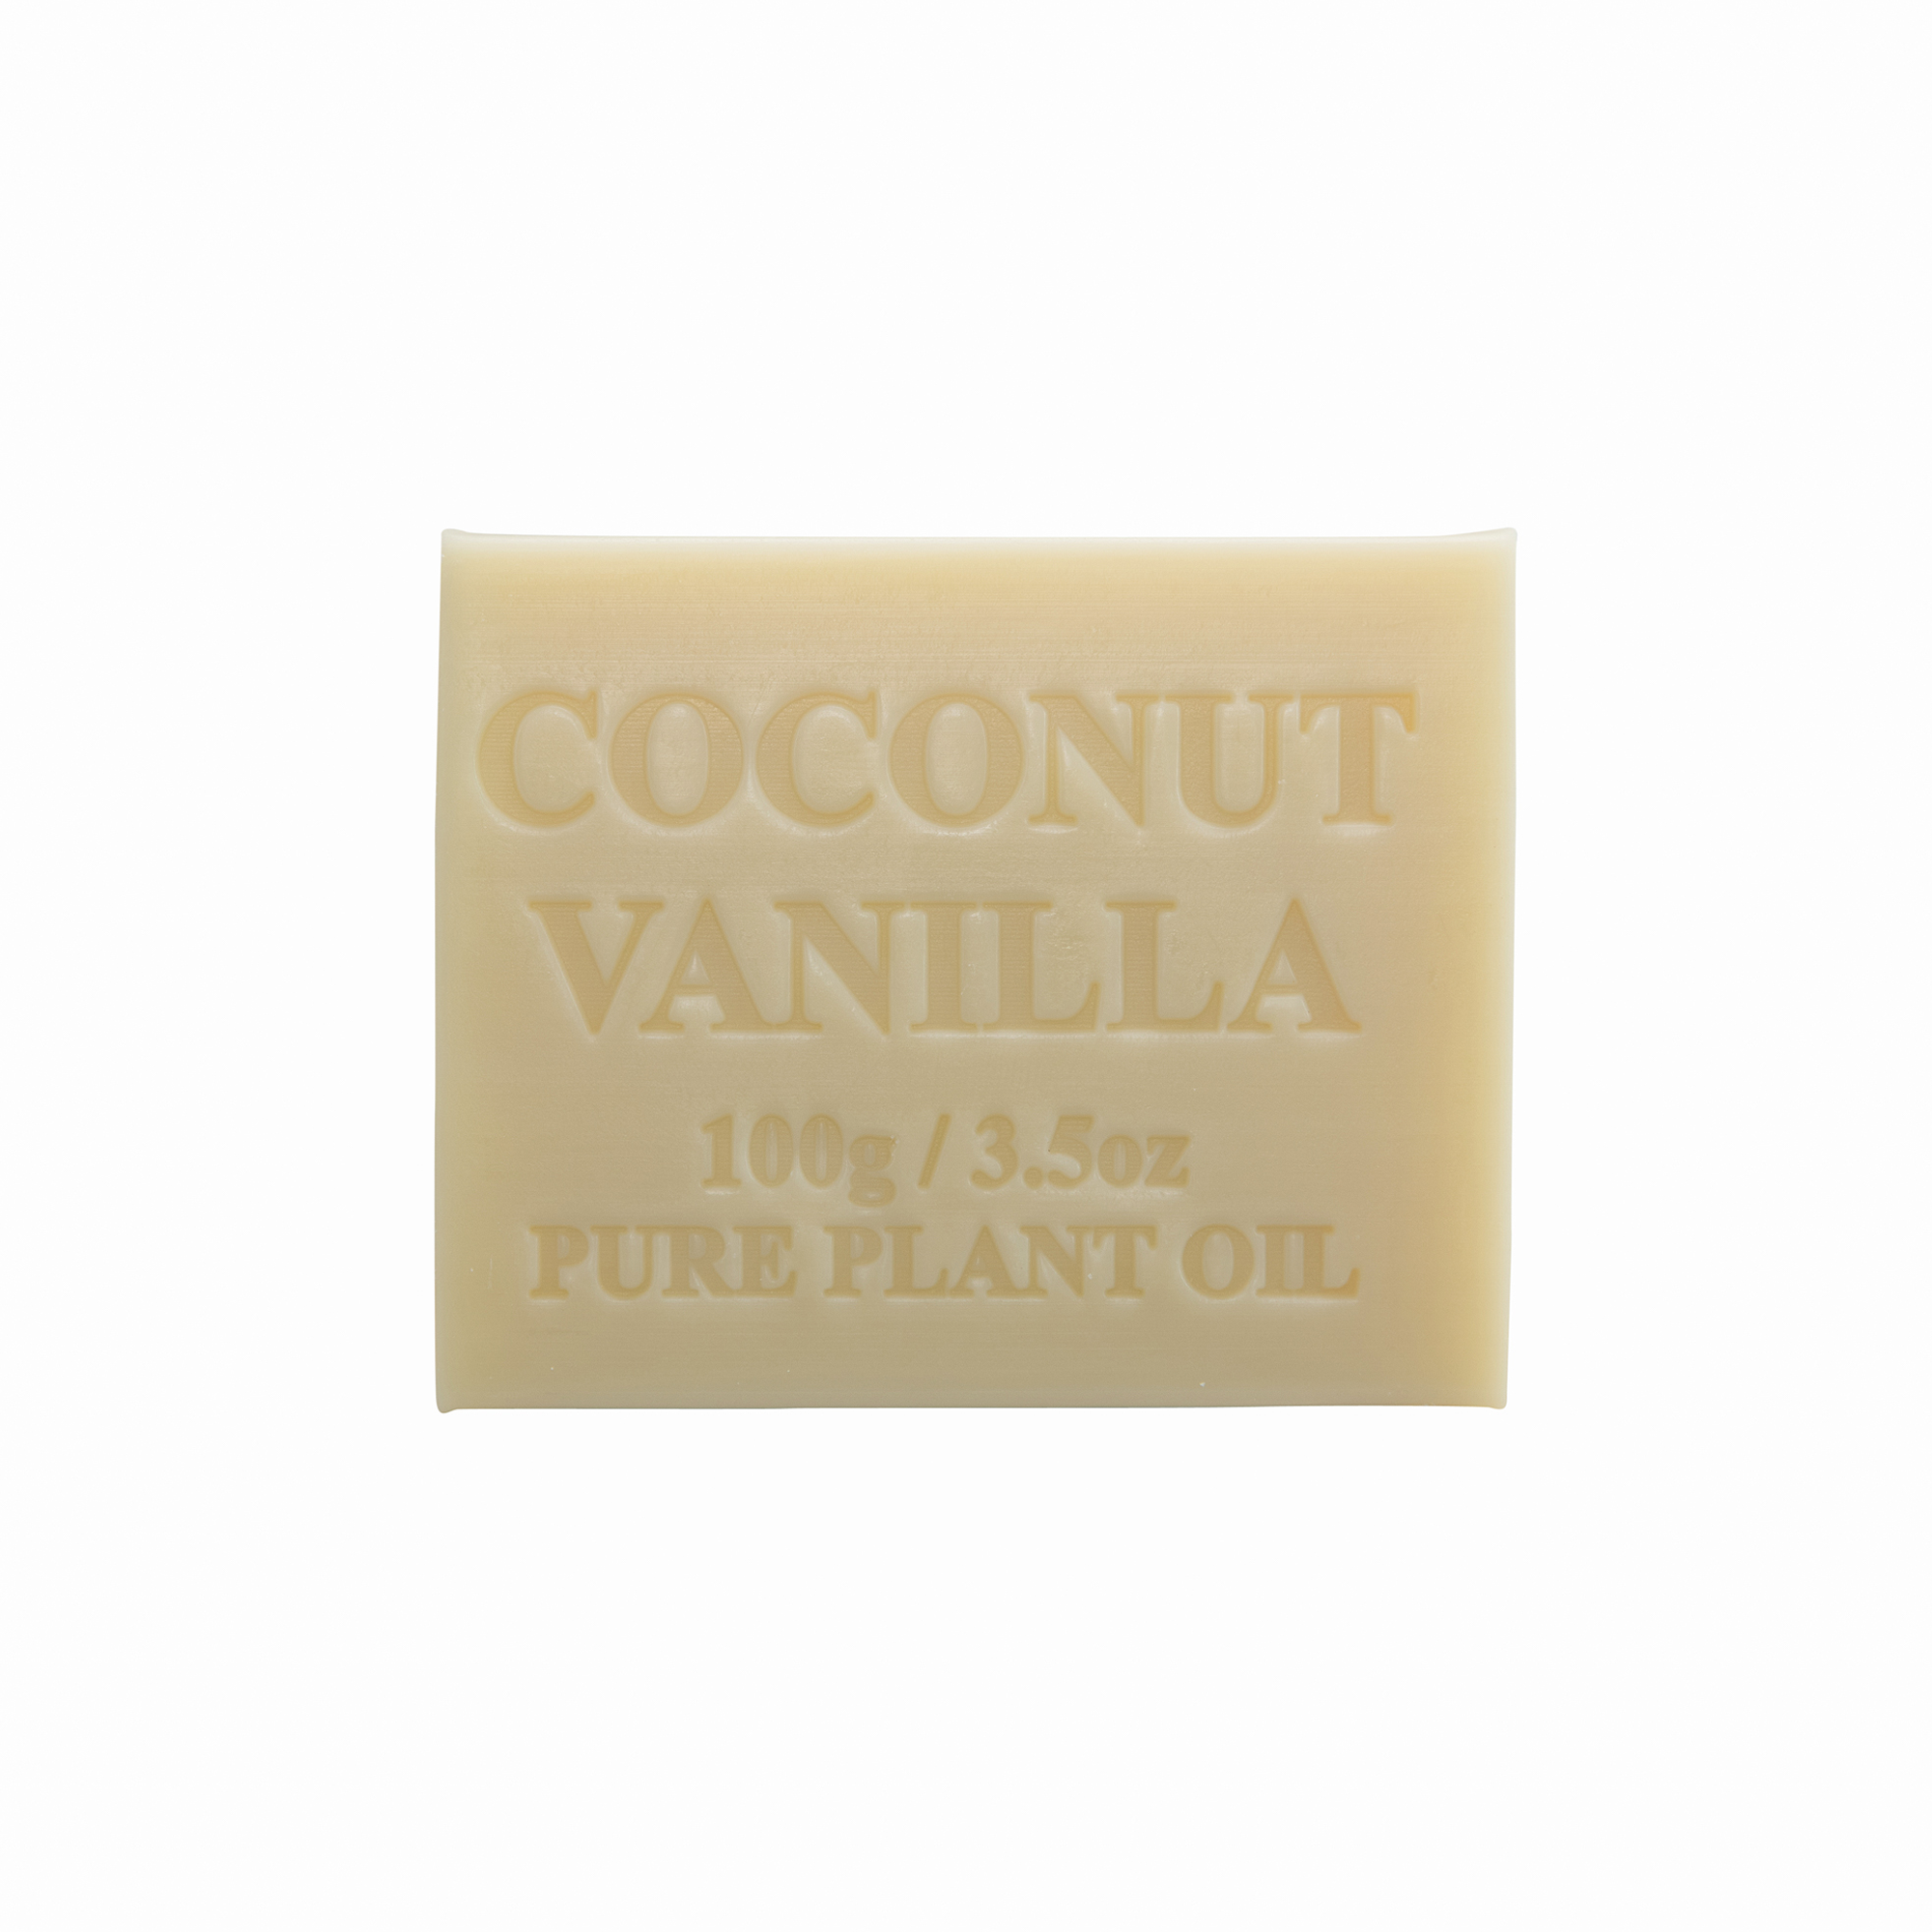 Coconut and Vanilla 100g